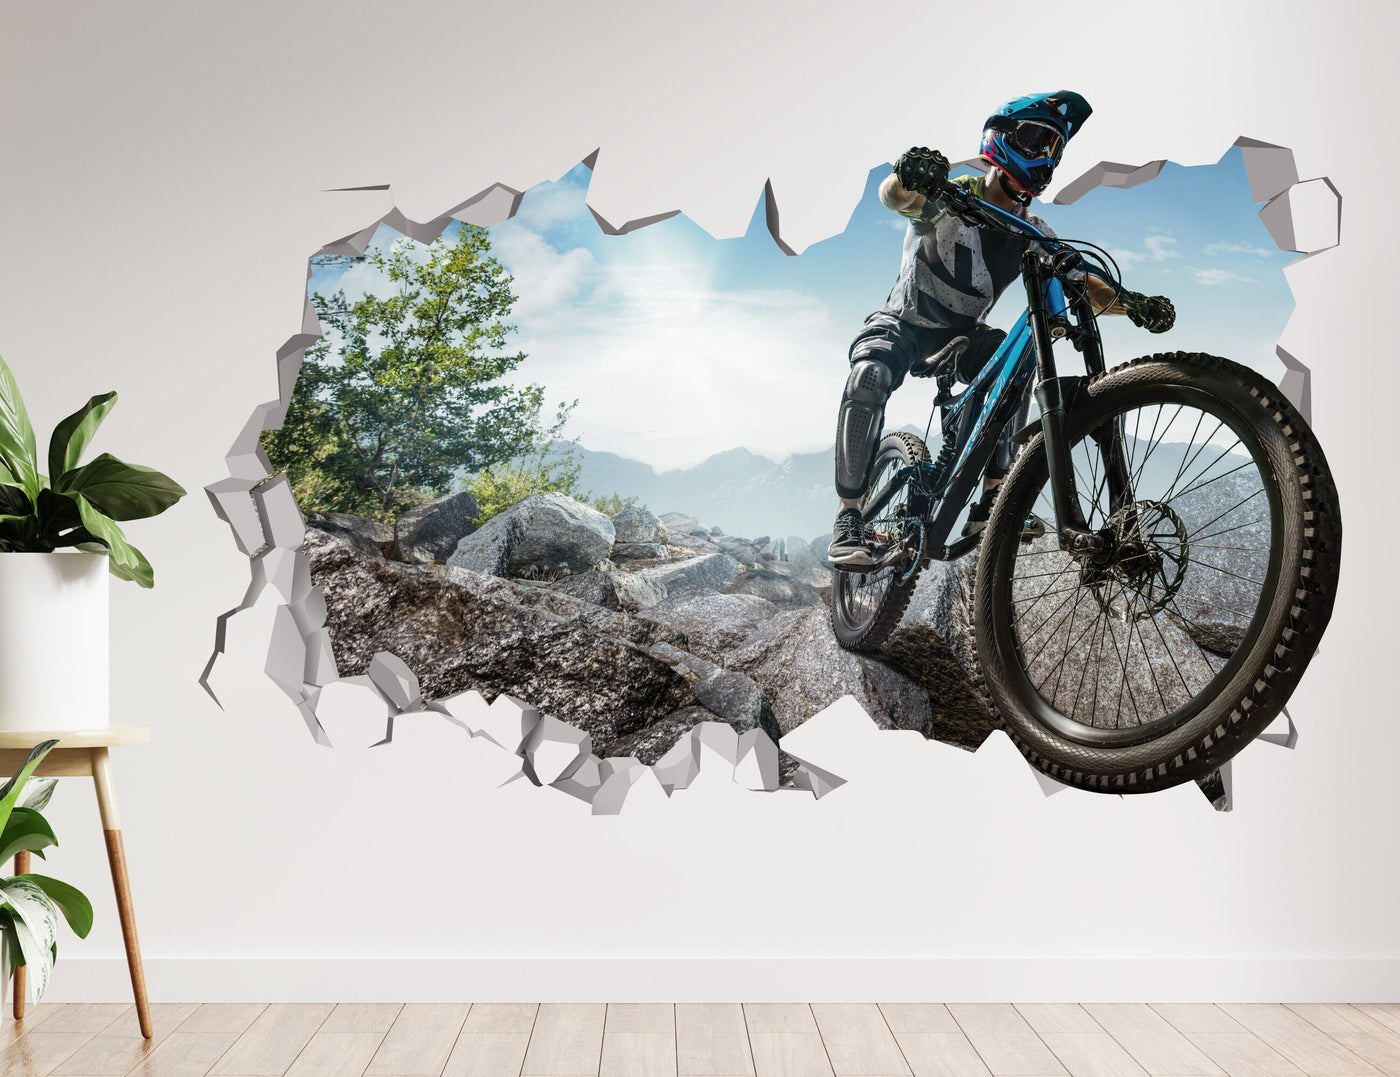 Decalque de parede de mountain bike - Decalque de bicicleta - Adesivos de bicicleta - Decalque de motocicleta - Decalque de parede 3D de arte em bicicleta - Presente de mountain bike - Decalque de mountain bike